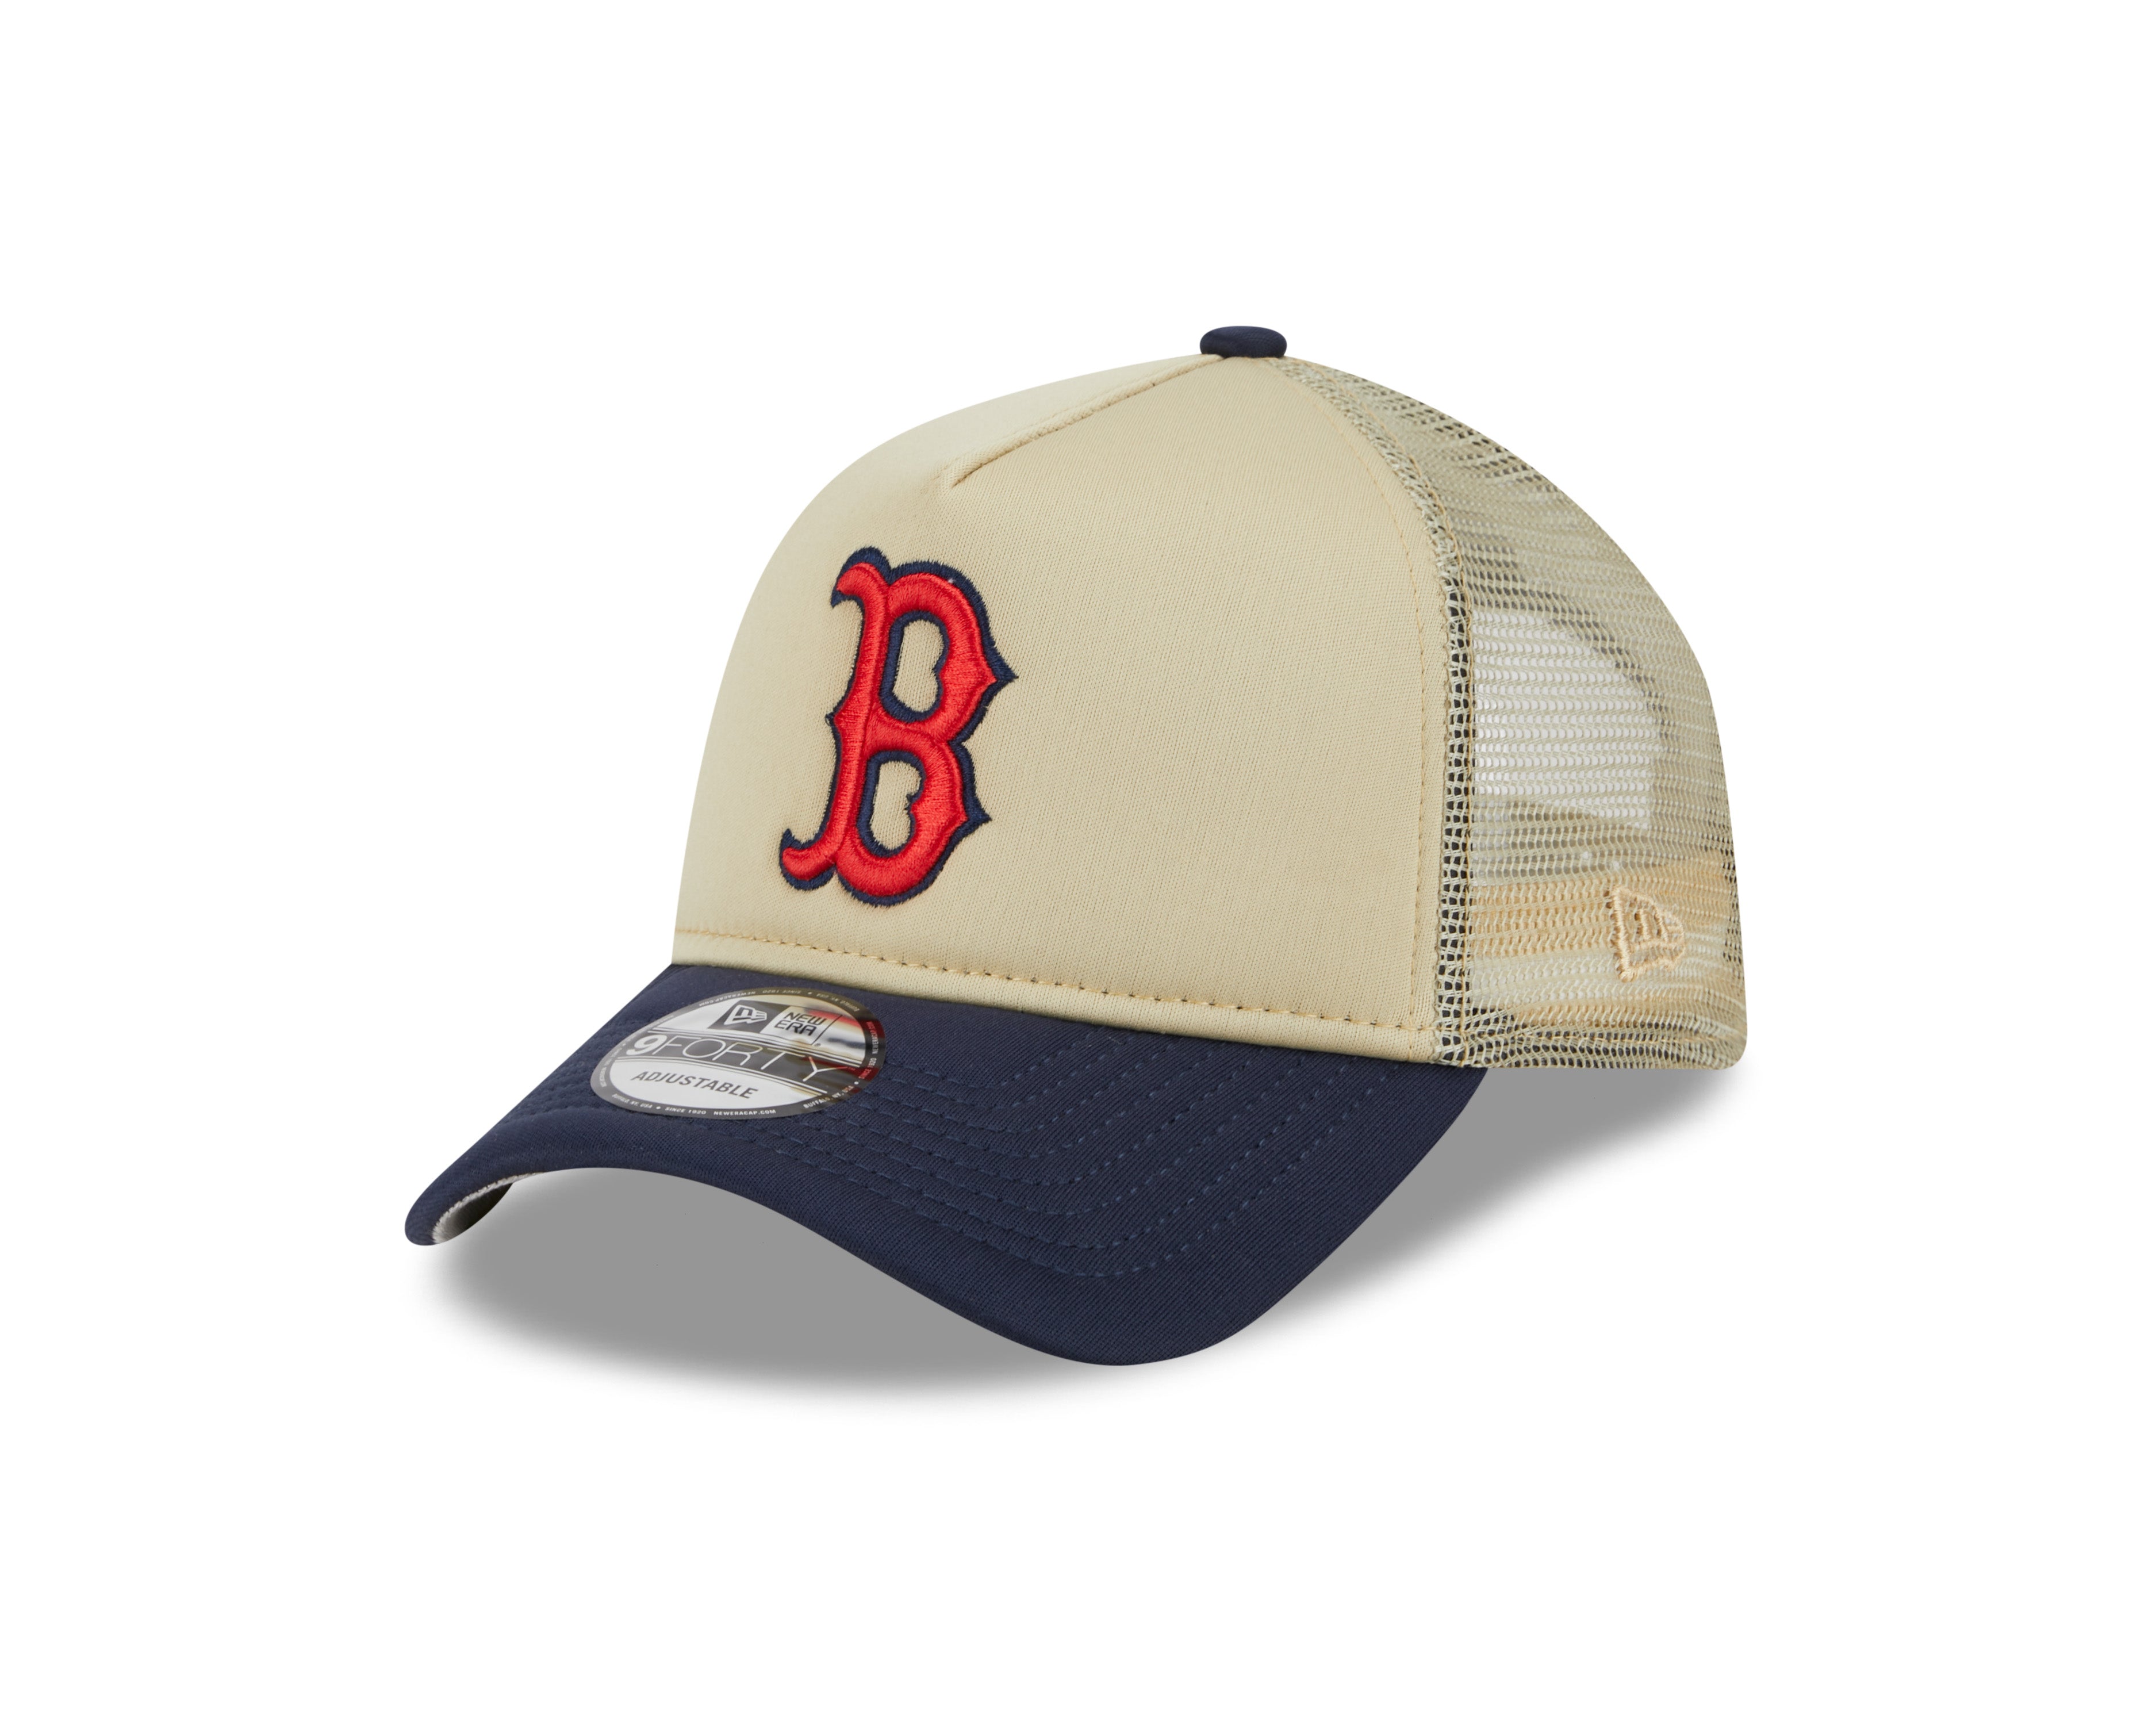 New Era - Boston Red Sox - All Day Trucker - Khaki/Navy - Headz Up 